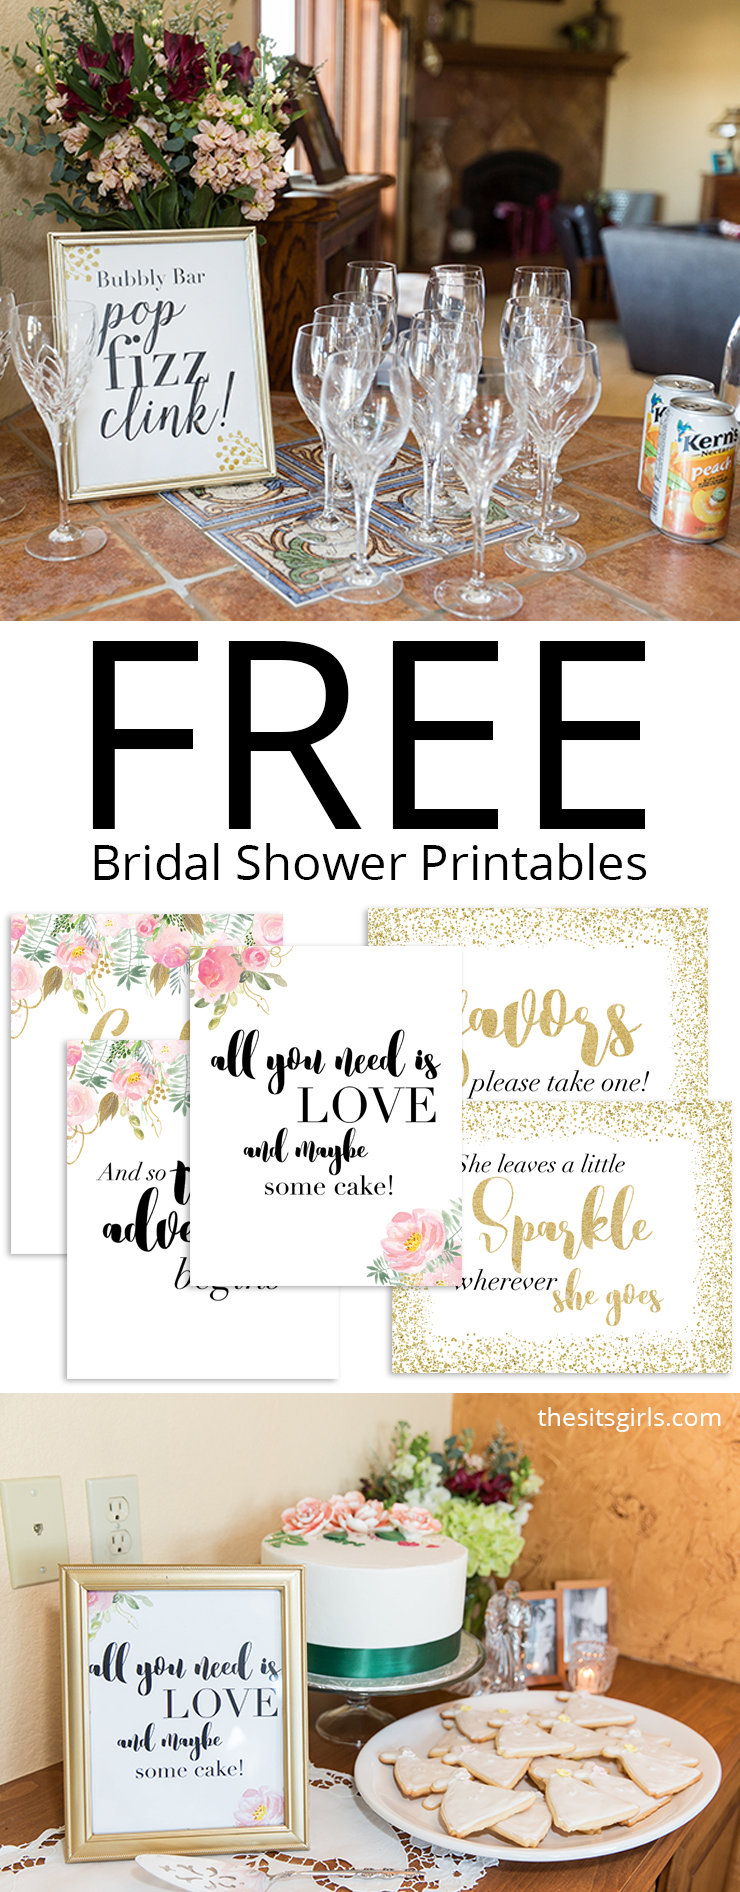 Bridal Shower Printables | Beautiful Bridal Shower Ideas